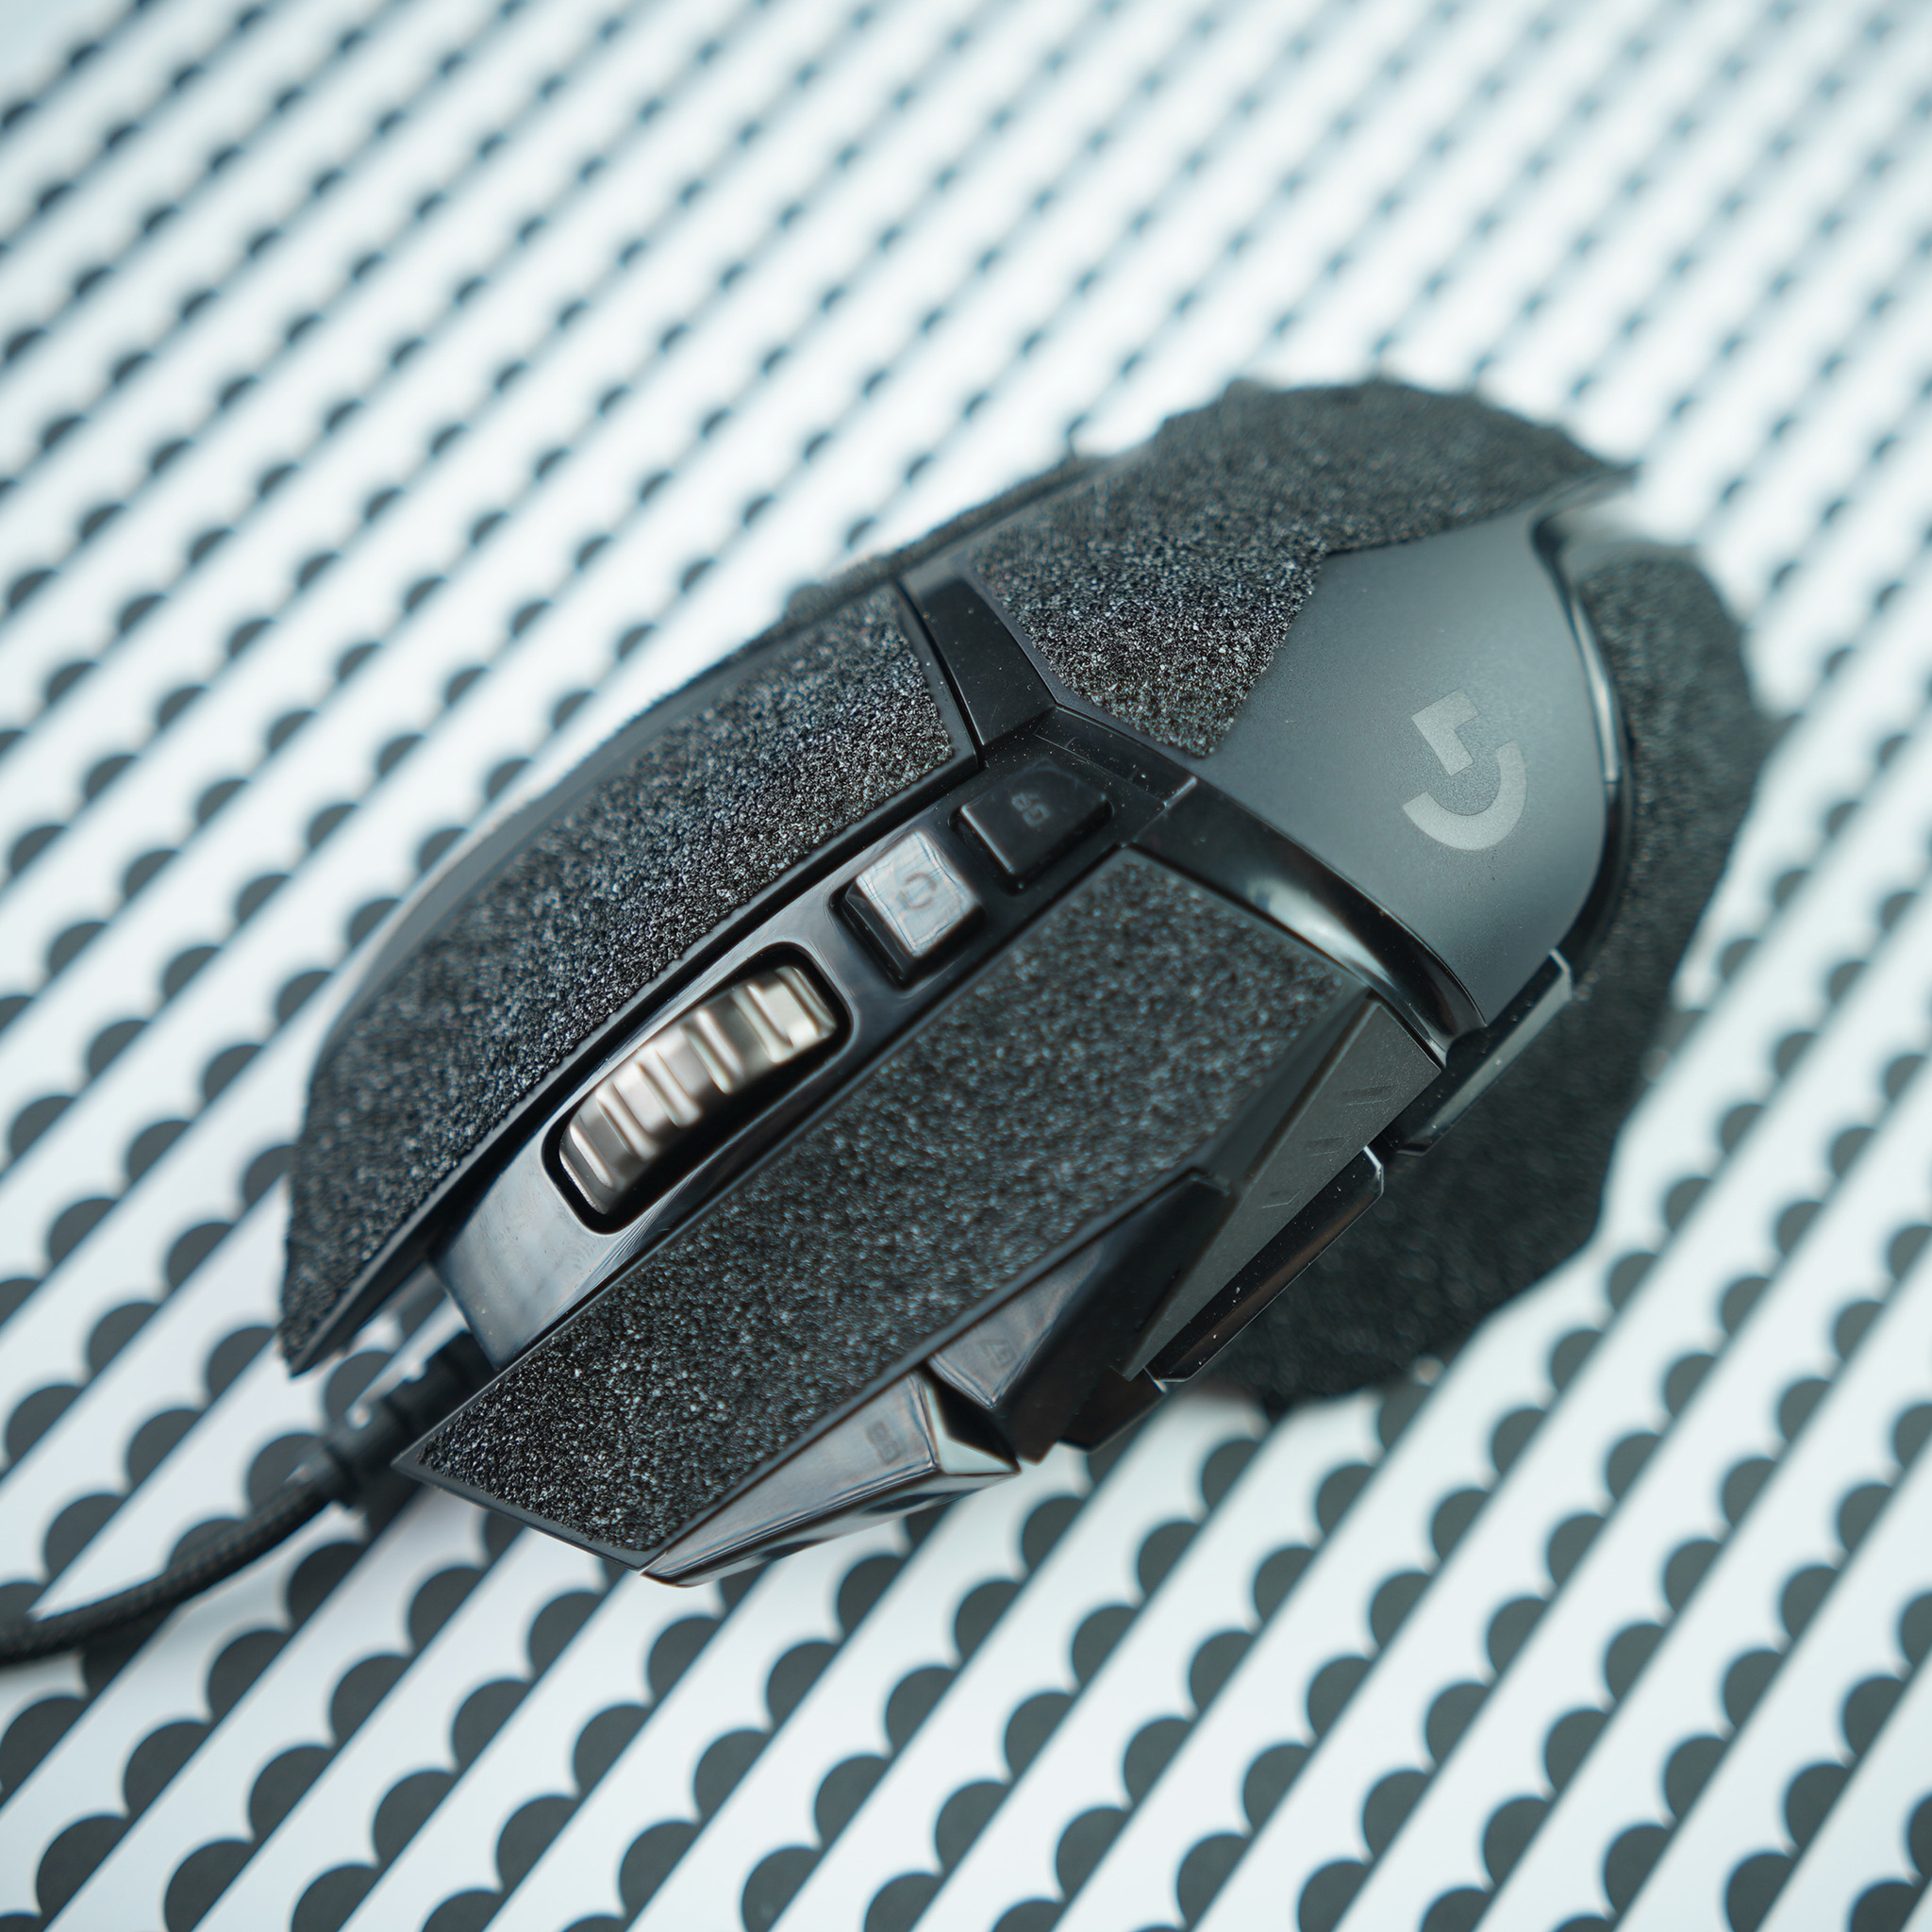 Logitech G502 Antgrip • Antgrip - Upgrade your mouse.